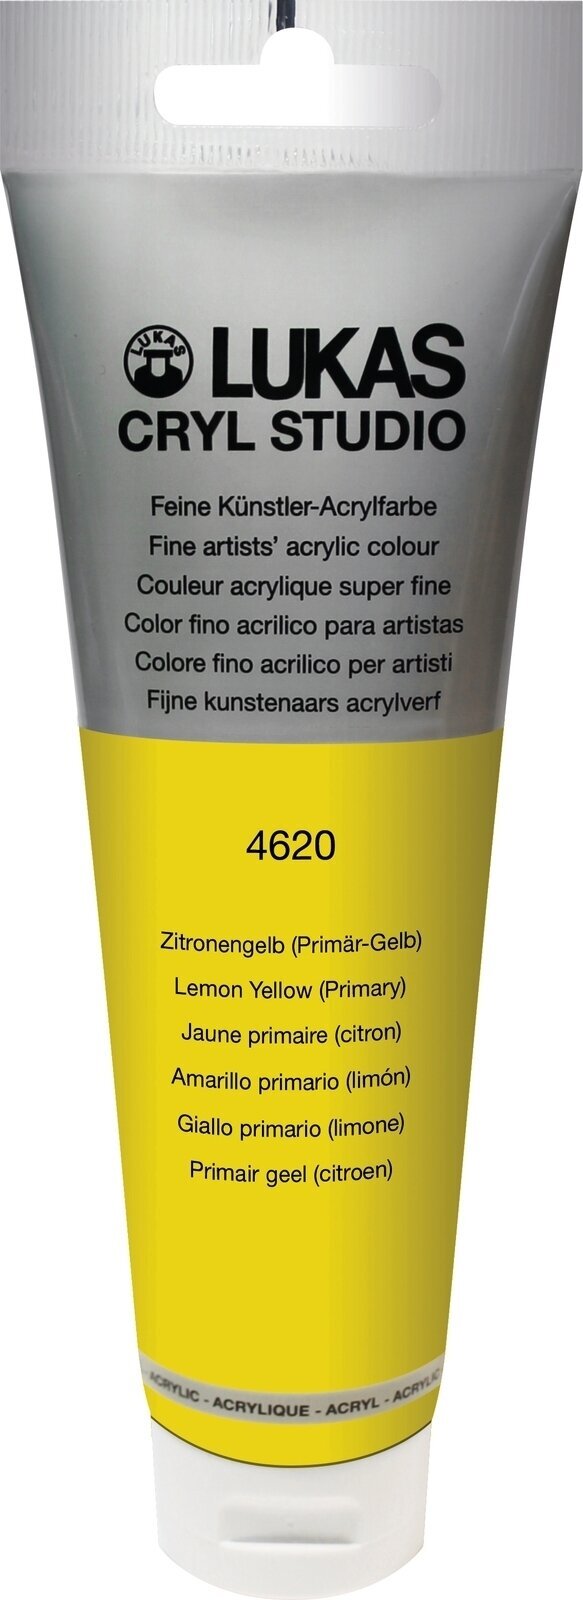 Acrylic Paint Lukas Cryl Studio Acrylic Paint Plastic Tube Acrylic Paint Lemon Yellow (Primary) 125 ml 1 pc